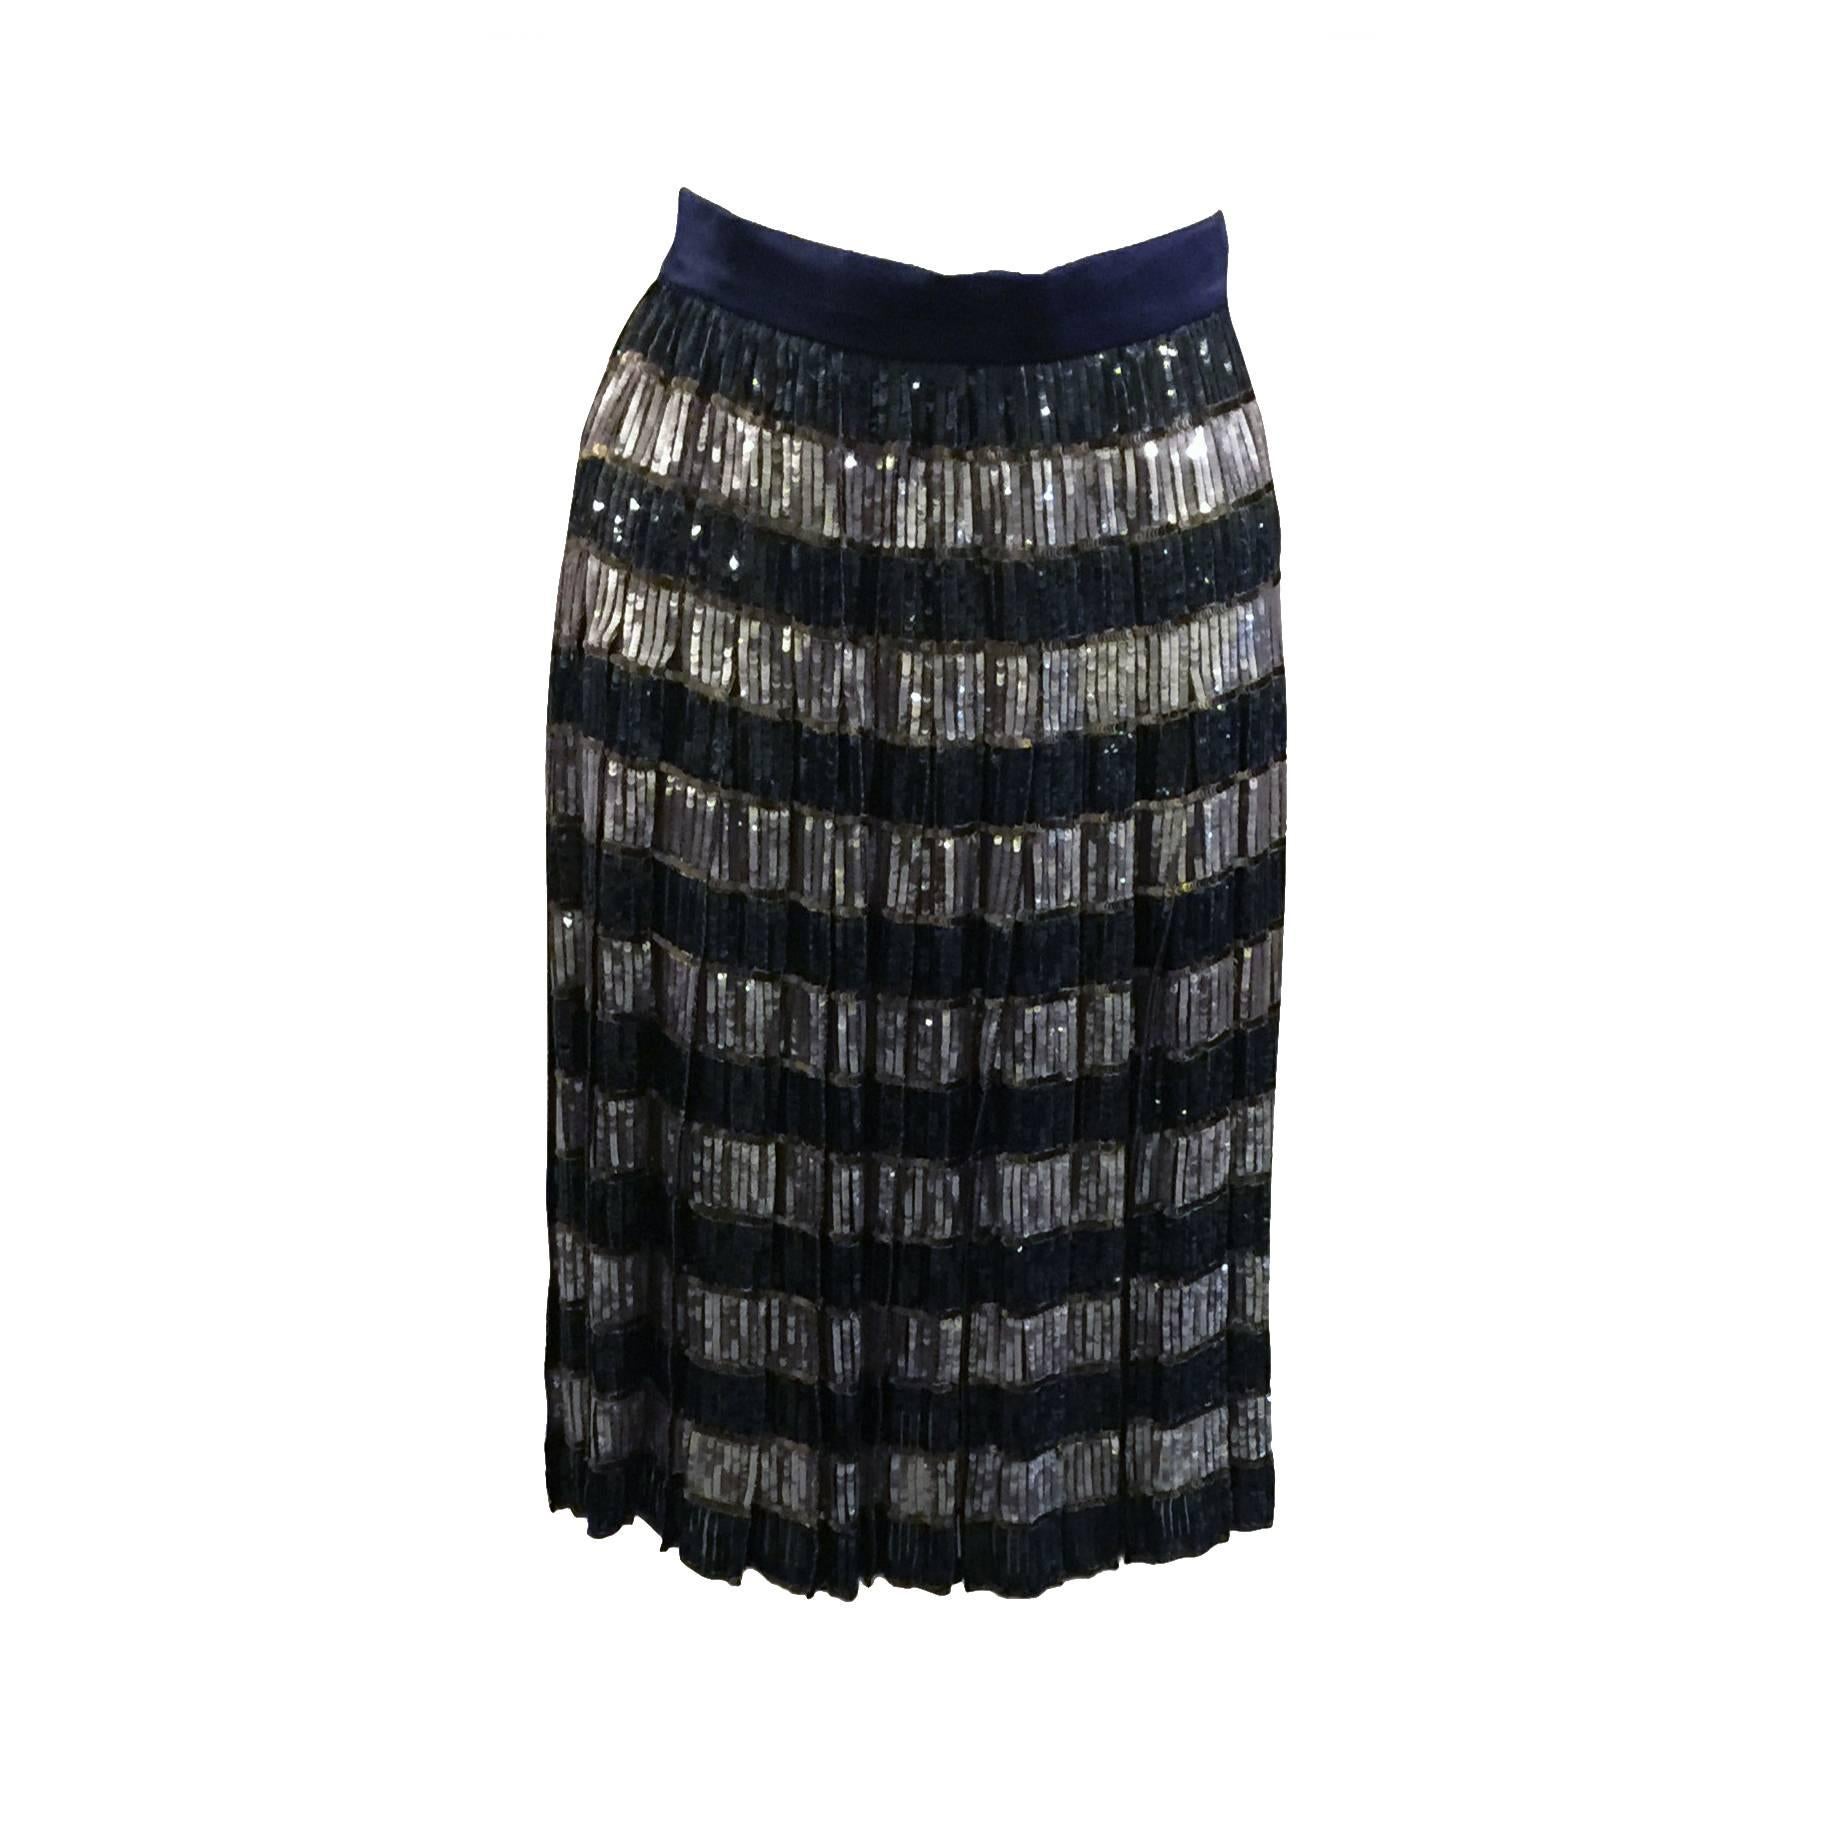 Valentino Sequin Skirt.  